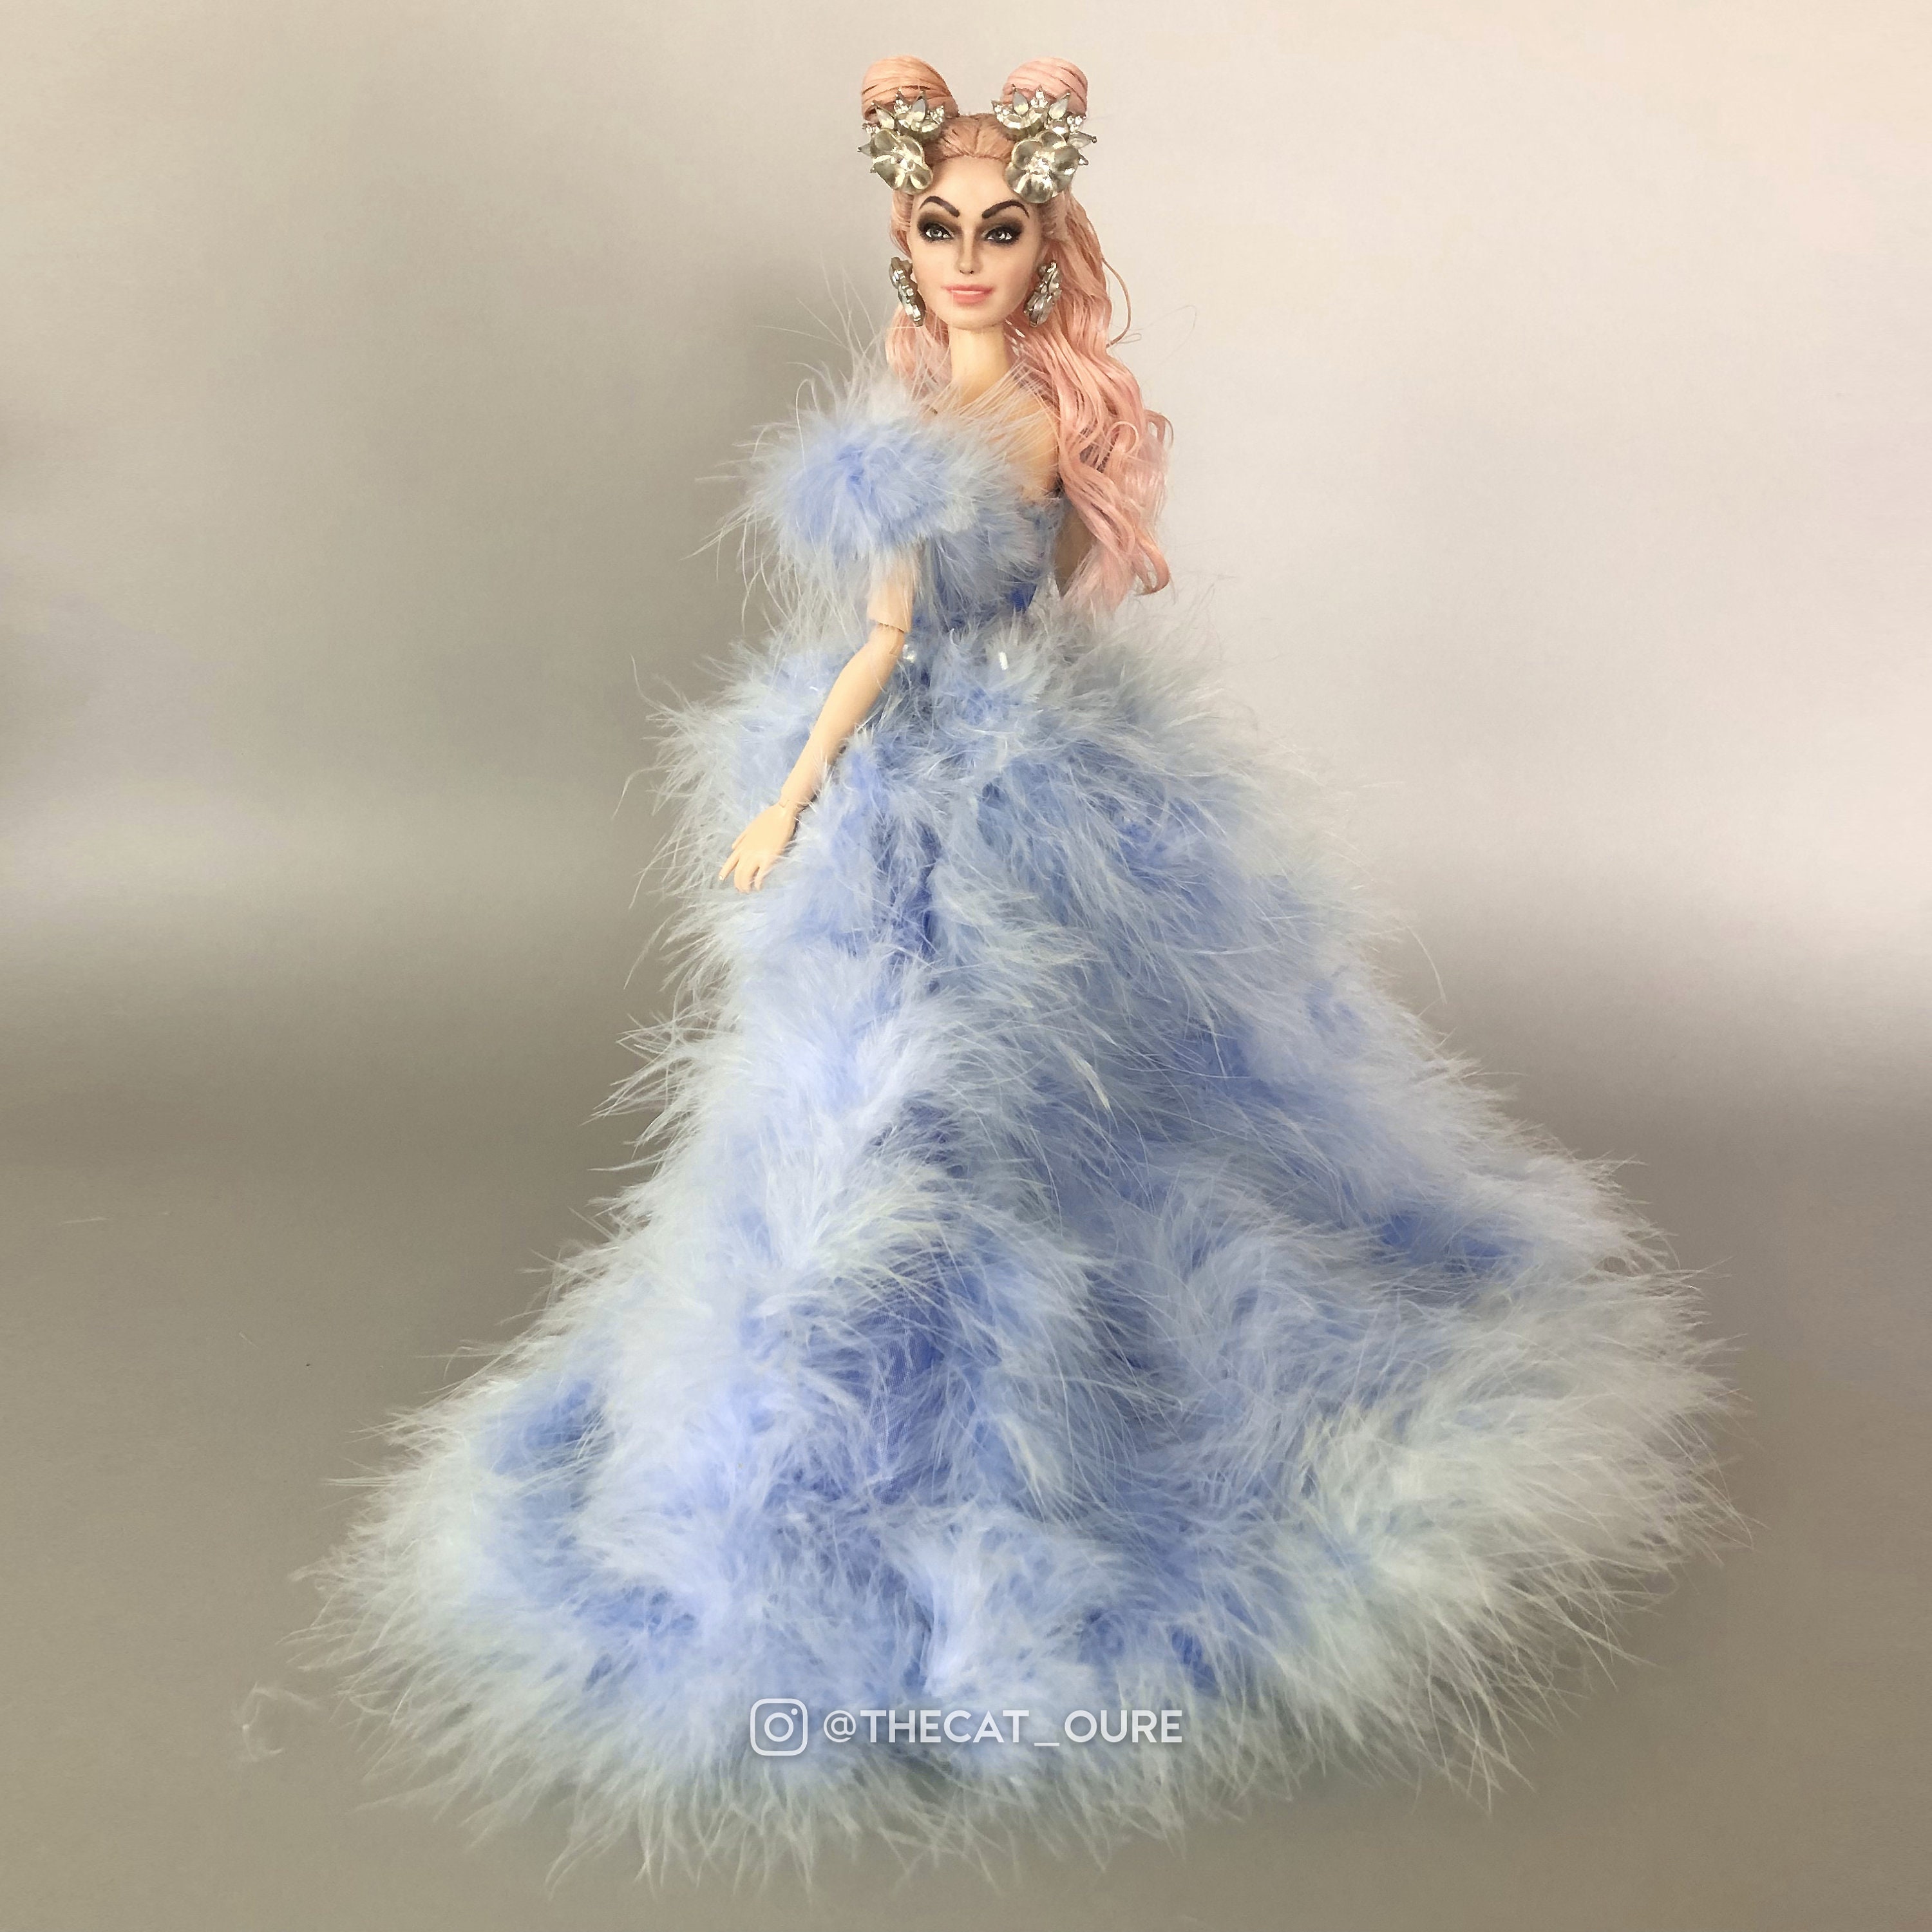 Tiara Custom Doll - Etsy